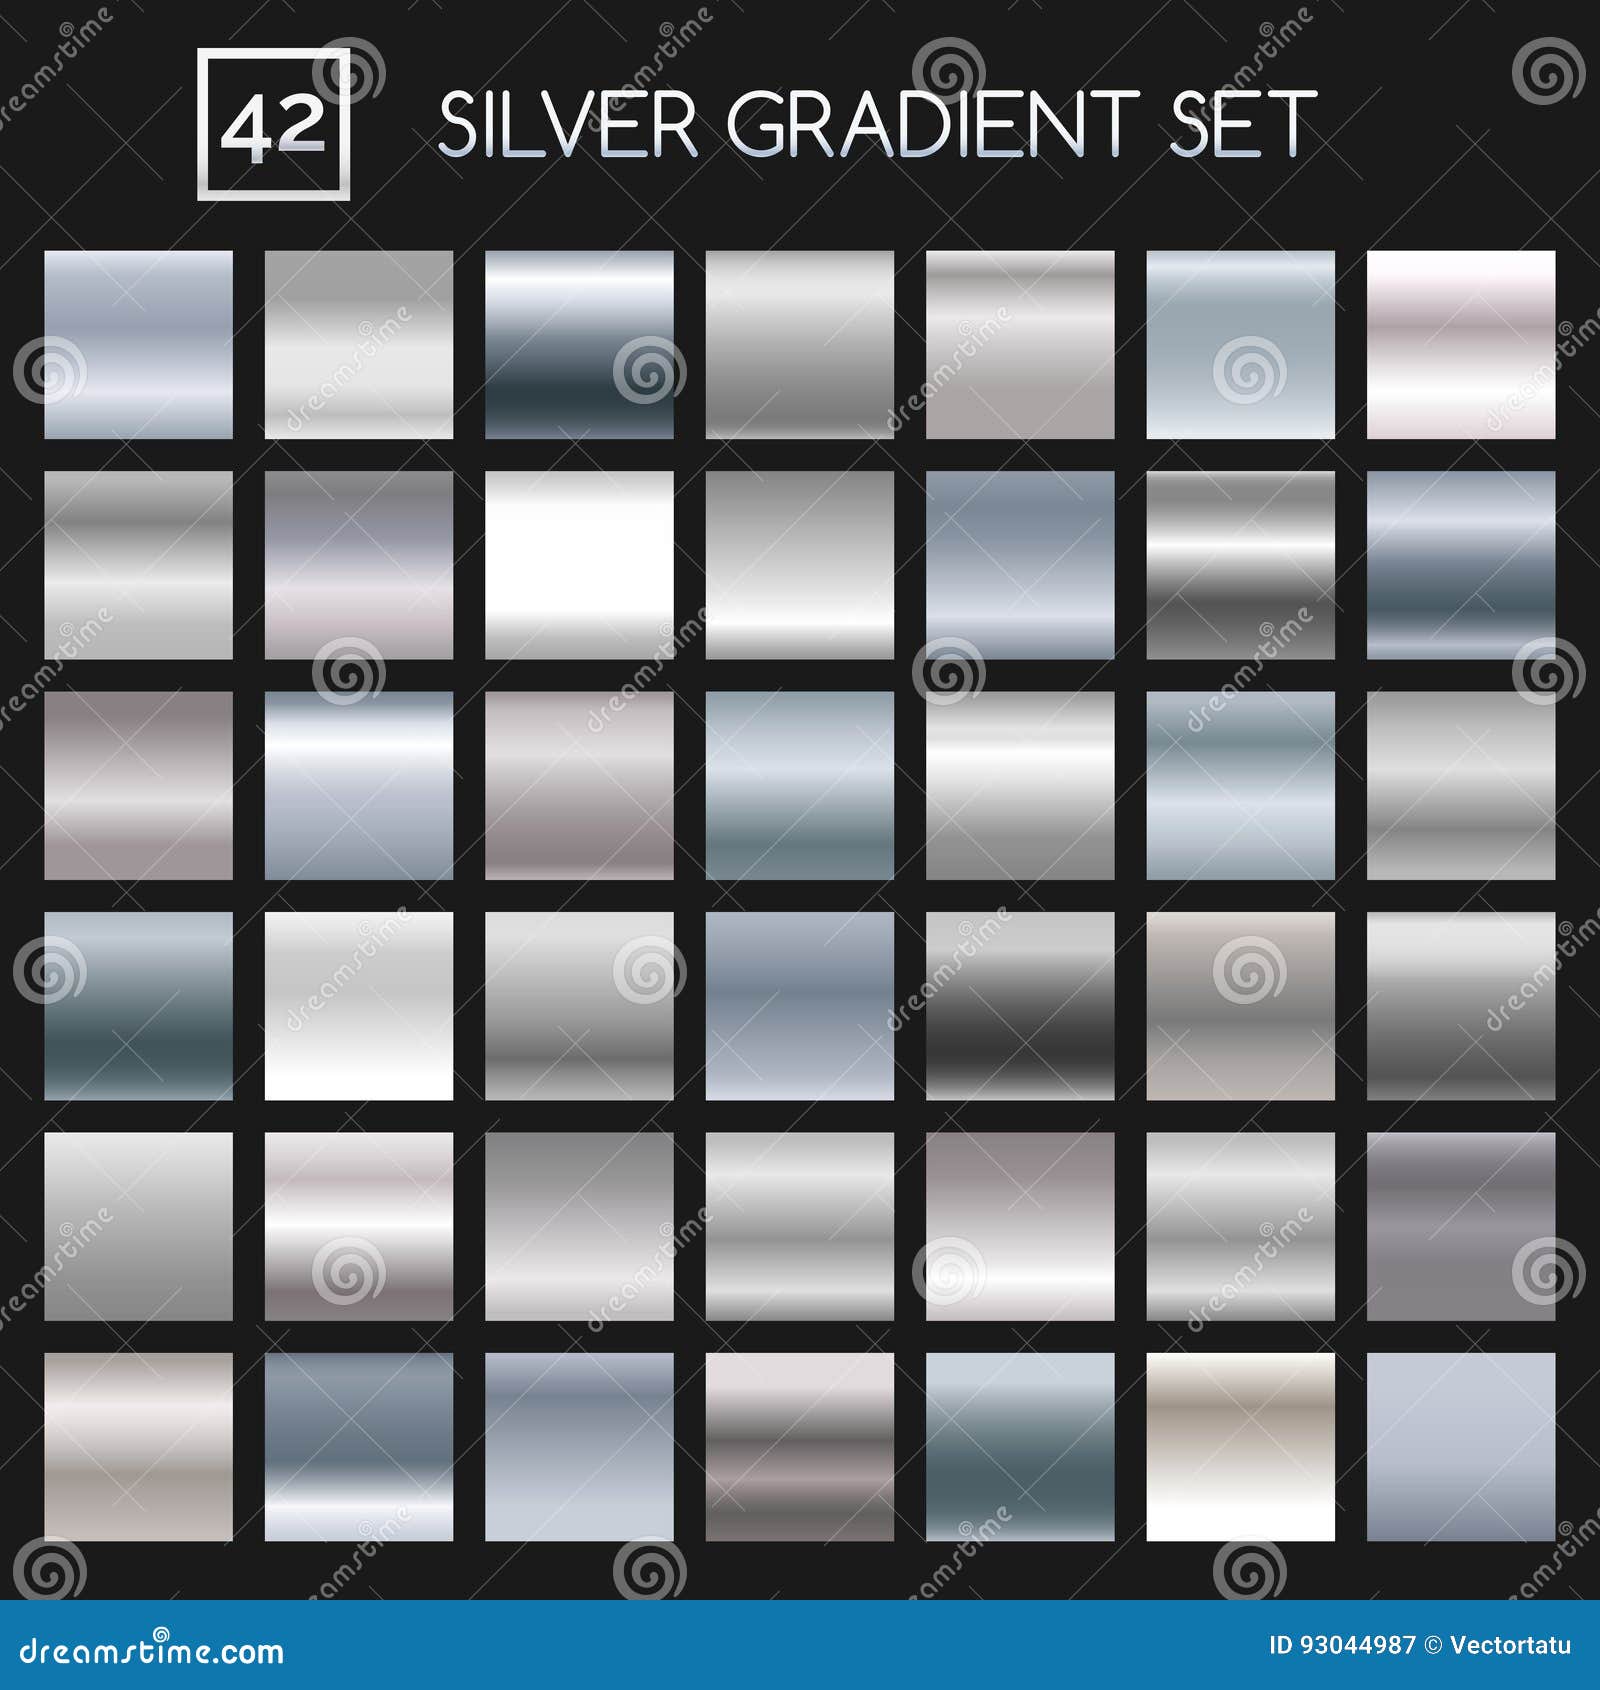 silver metallic gradient set